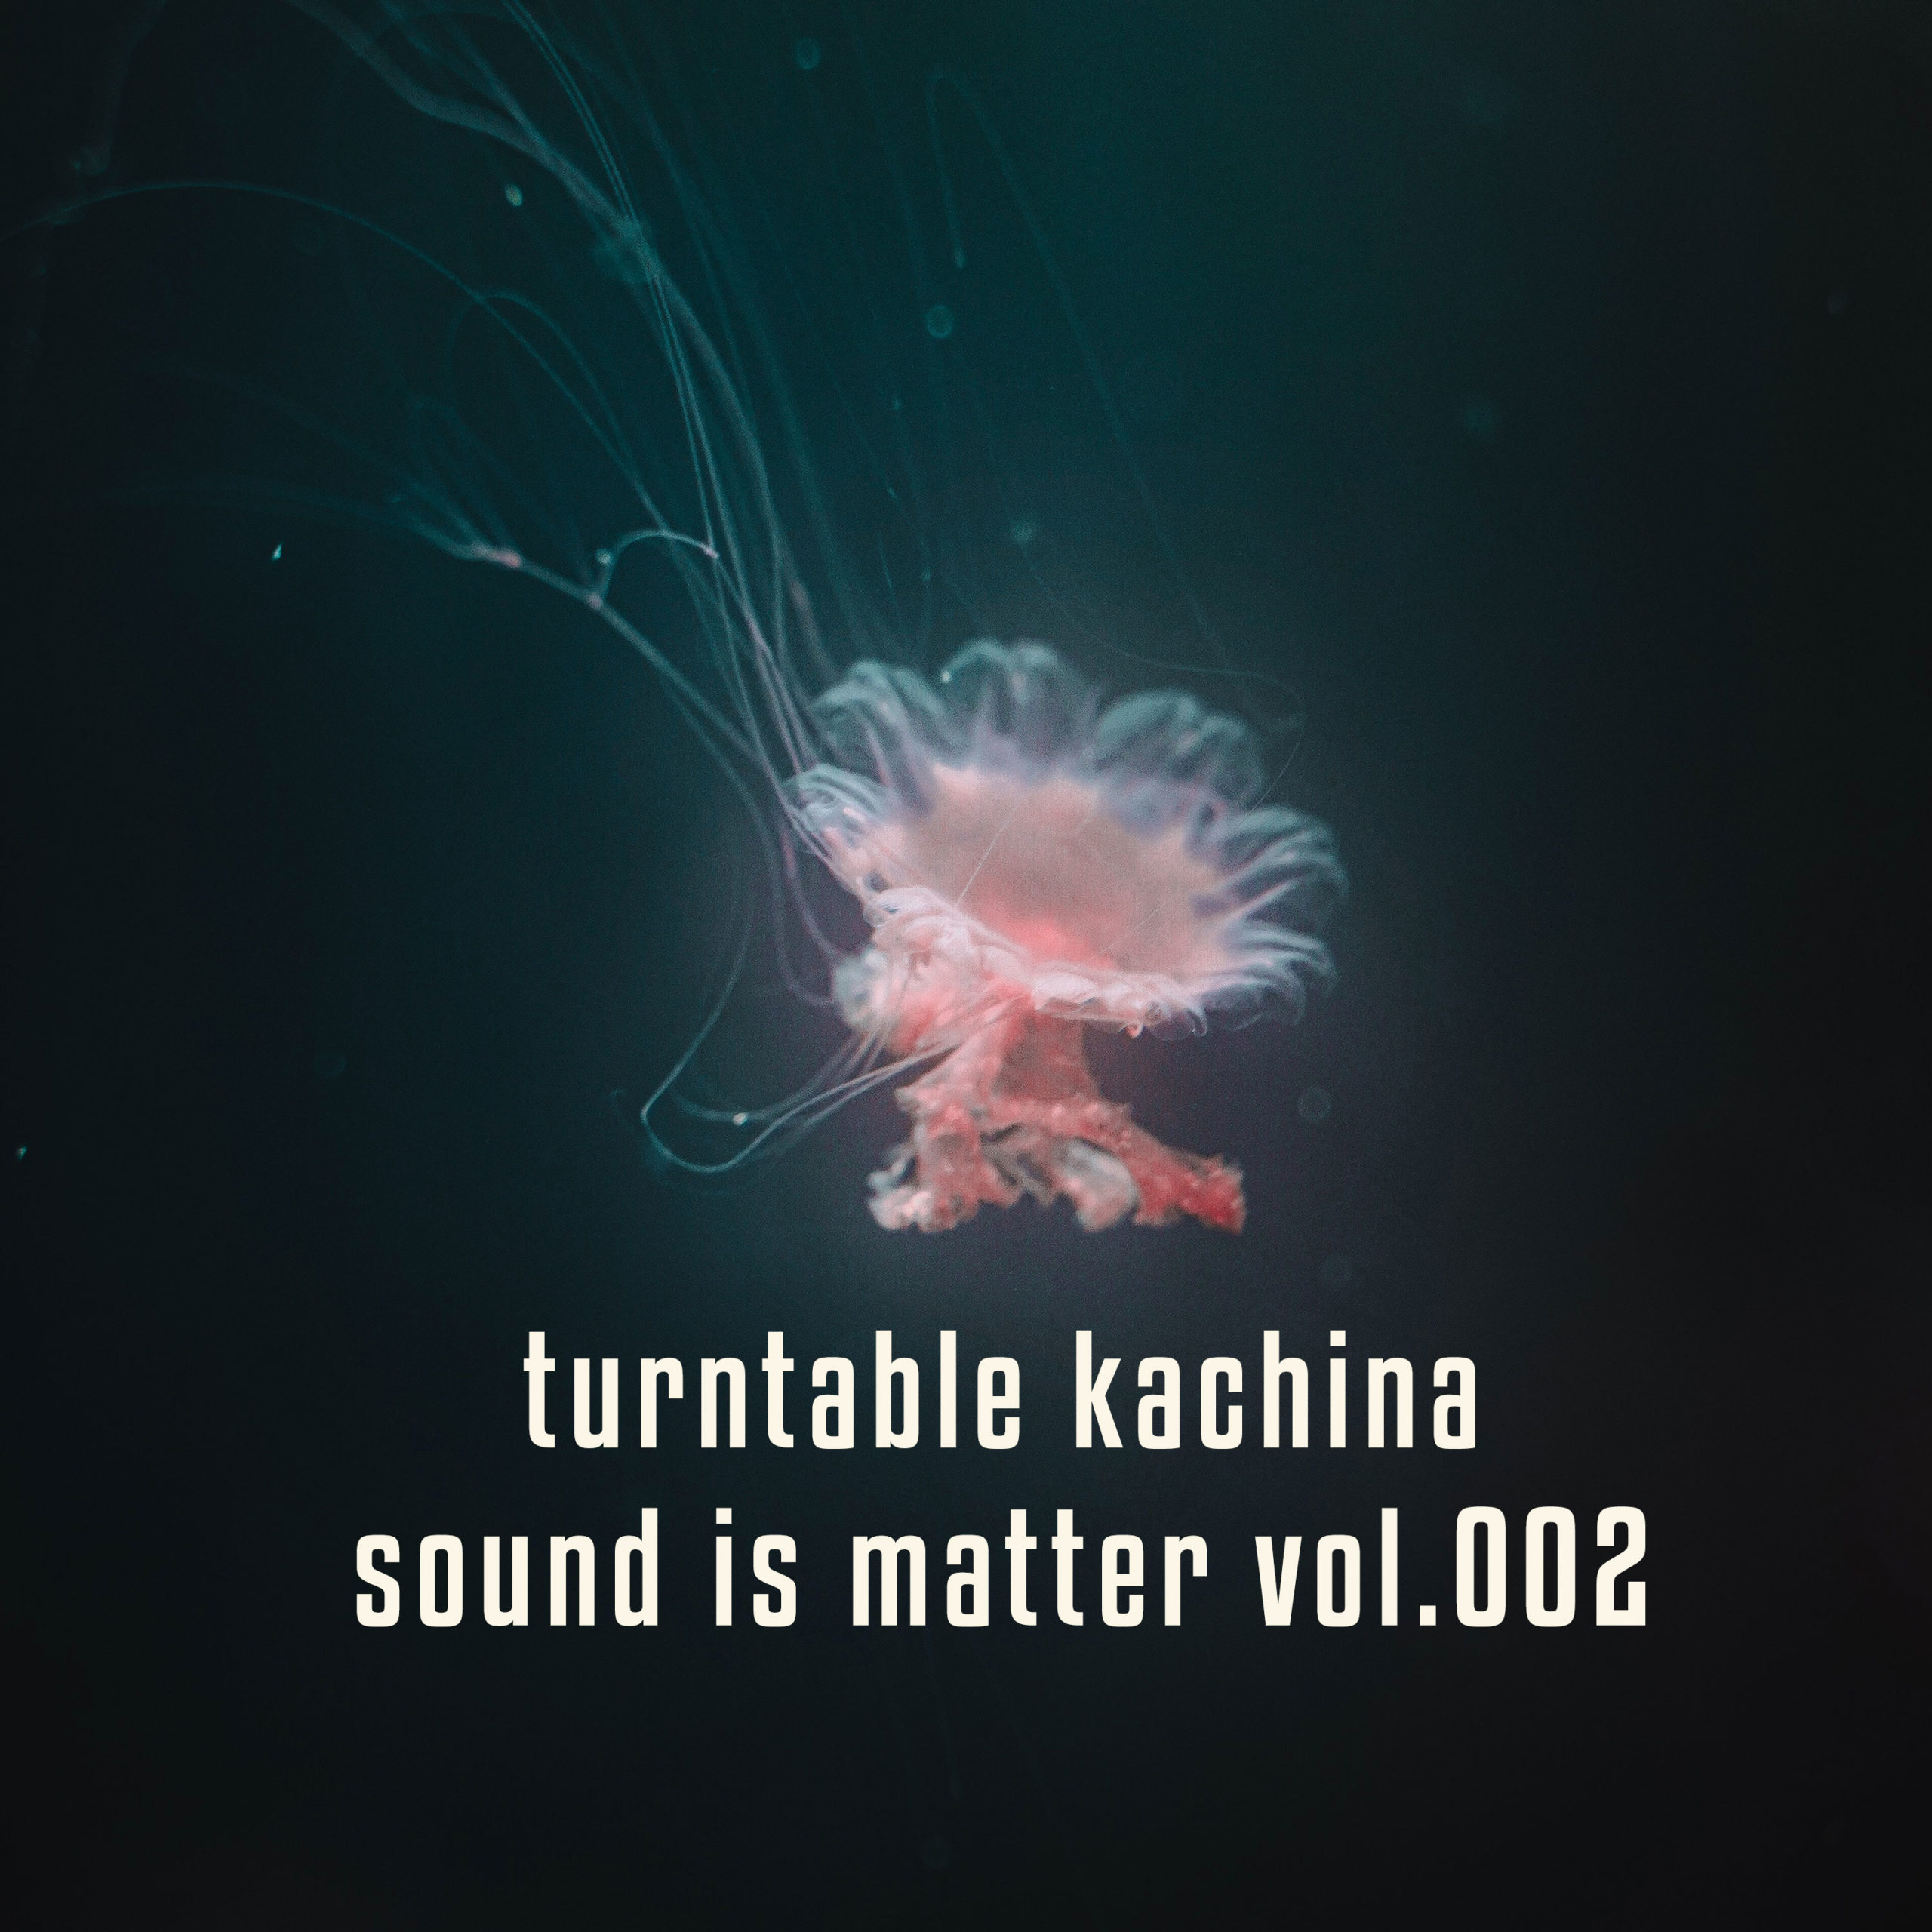 sound-is-matter-vol002--turtable-kachina-album-cover